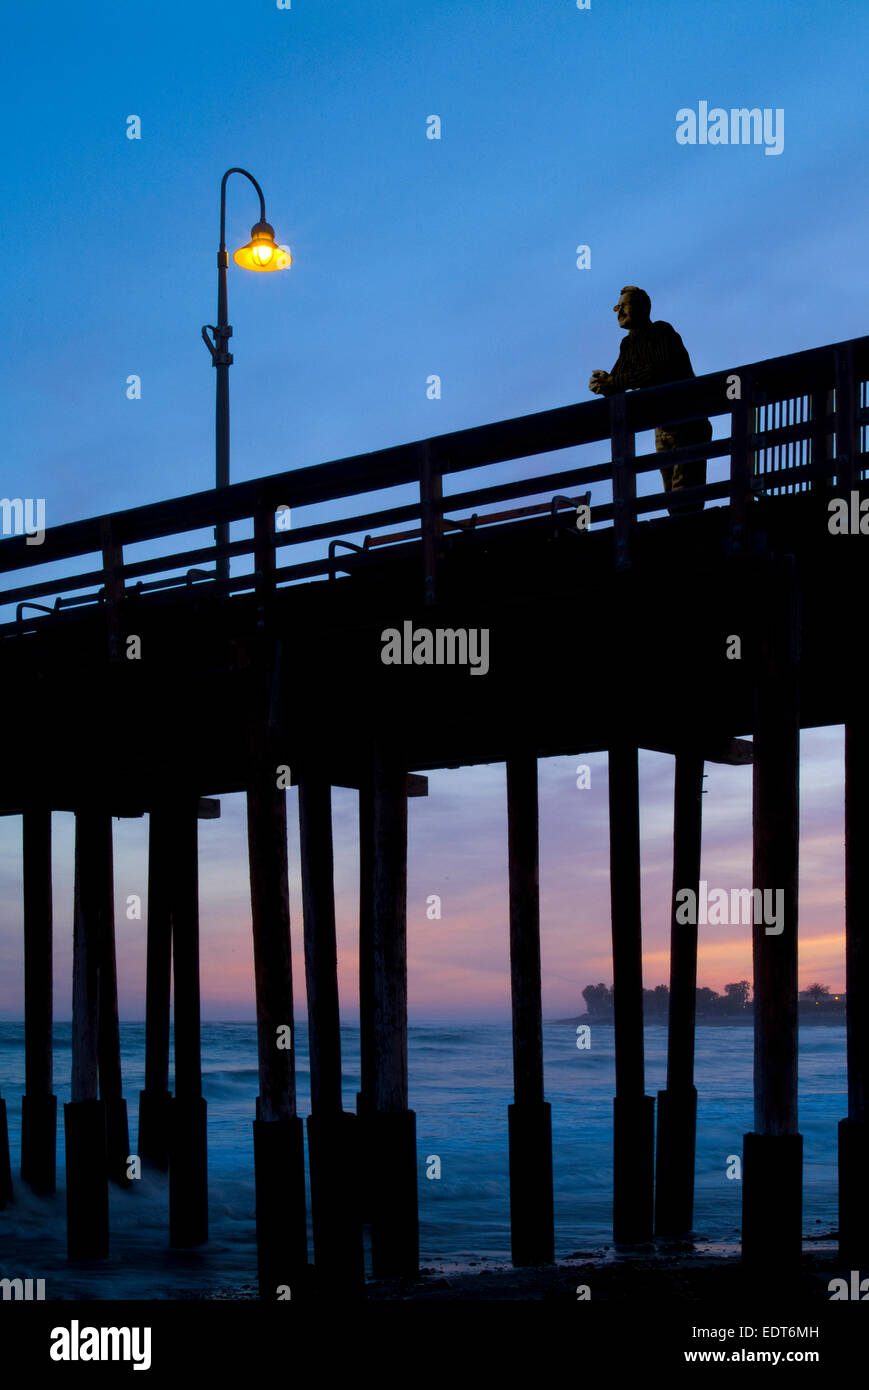 Man On Ventura Pier With Light At Sunset, California USA Stock Photo